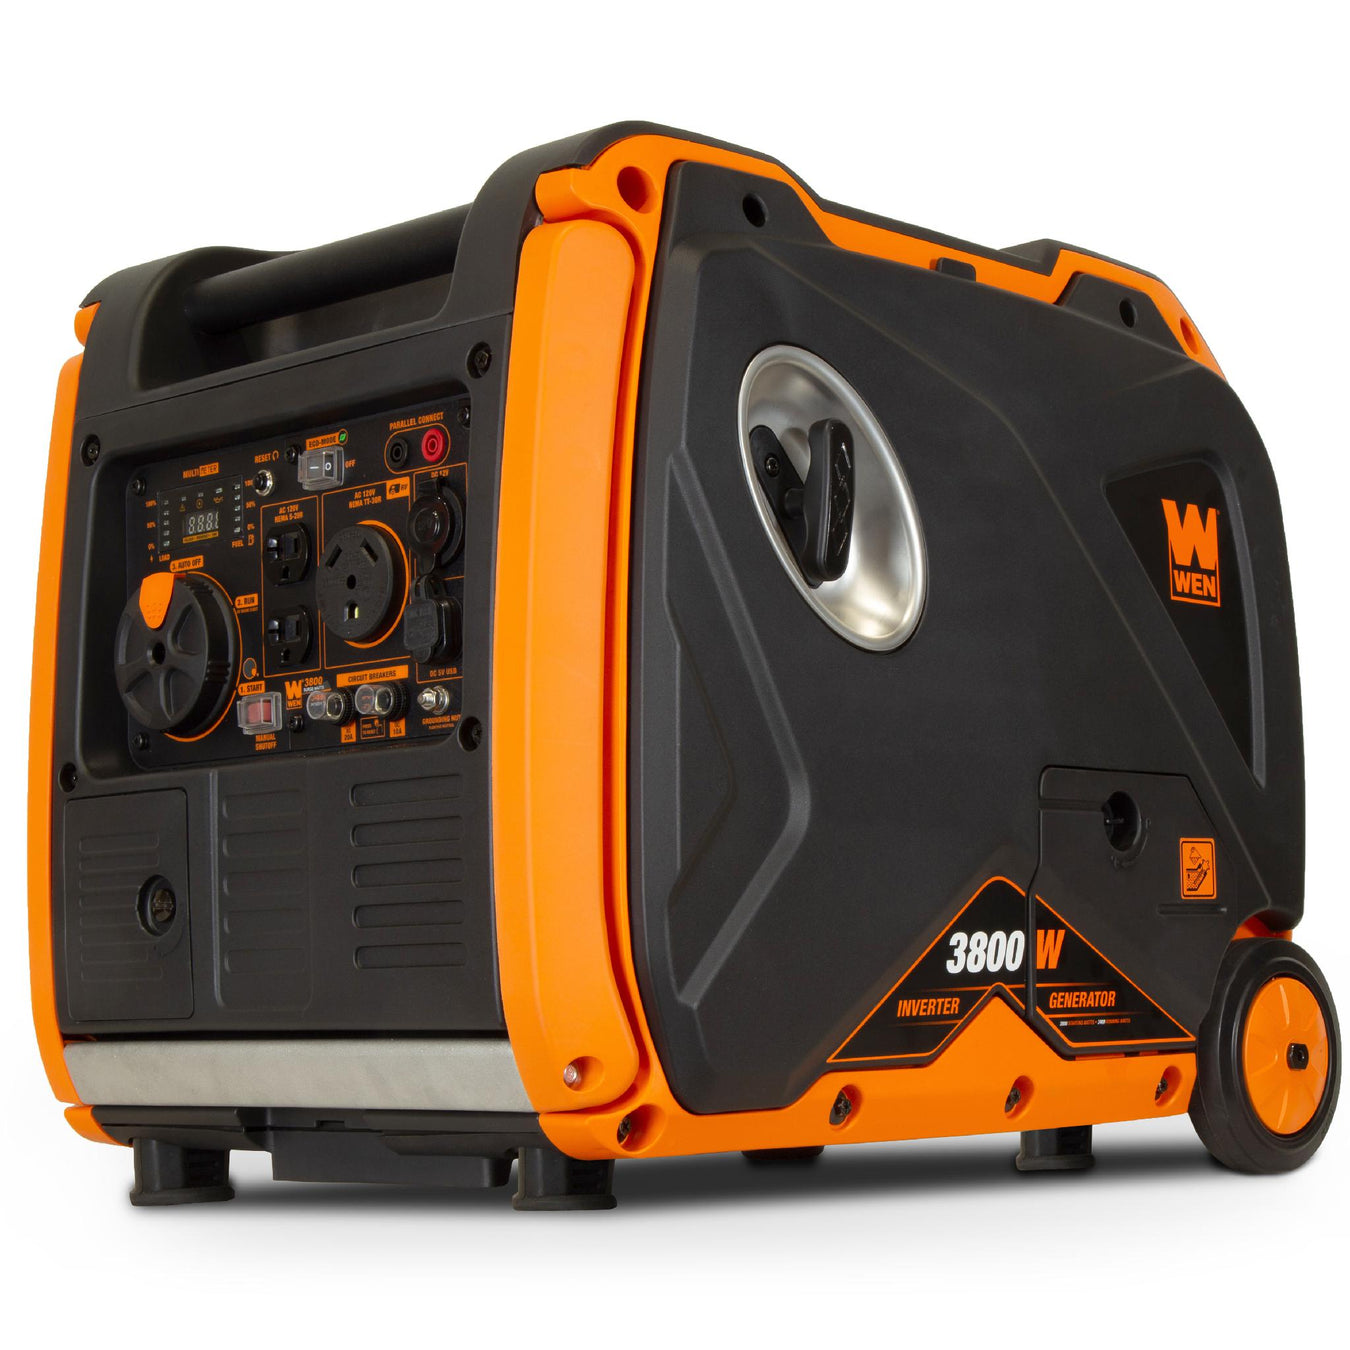 Shop Portable Generators and Generator Accessories